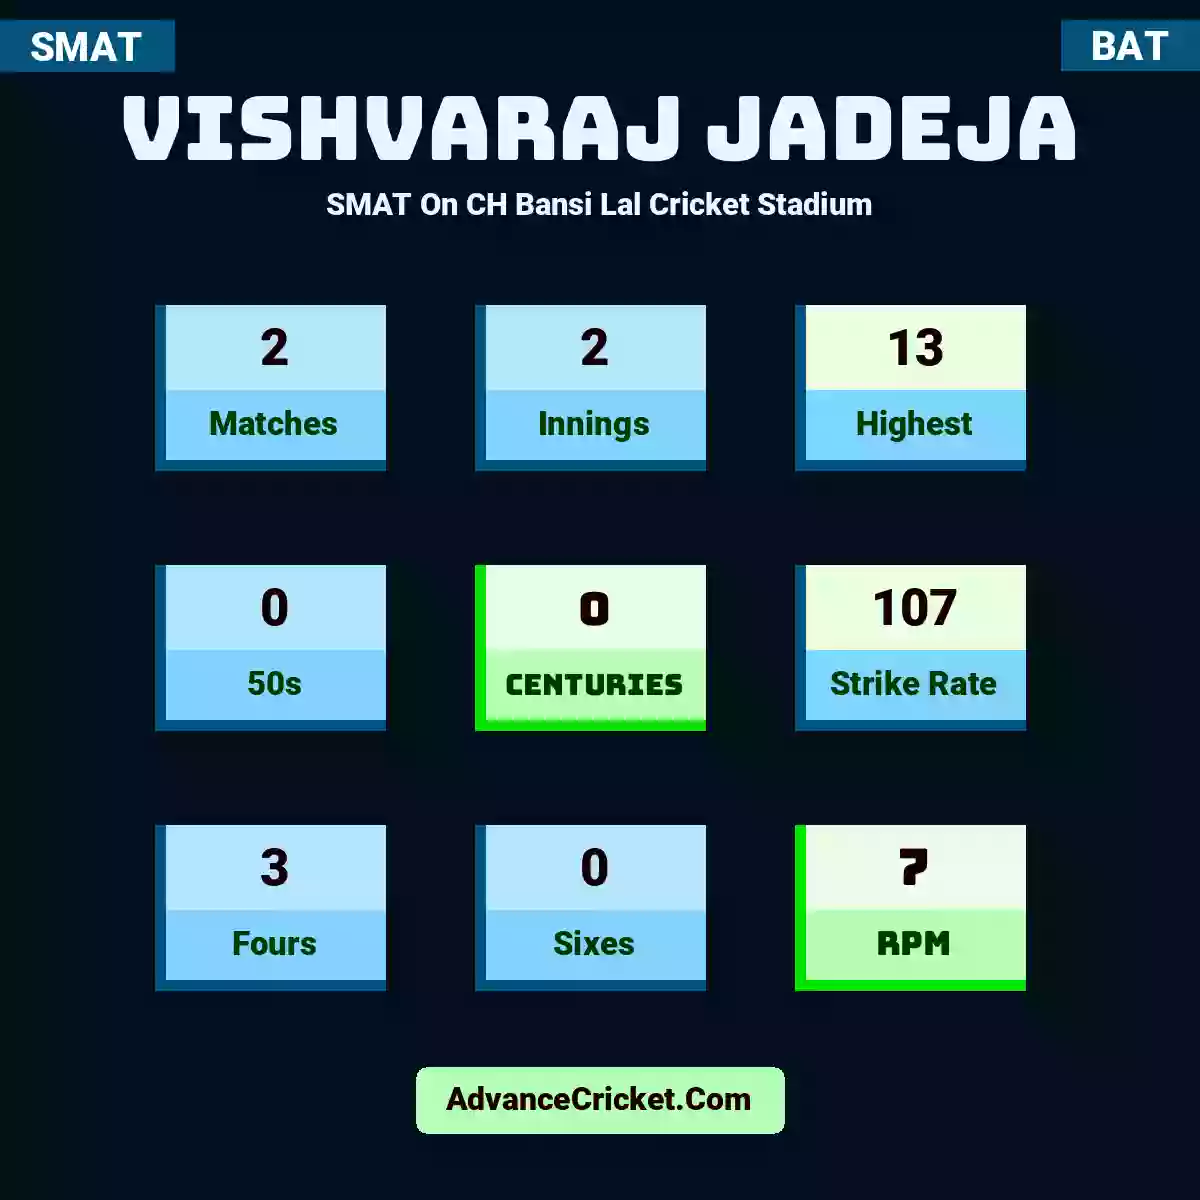 Vishvaraj Jadeja SMAT  On CH Bansi Lal Cricket Stadium, Vishvaraj Jadeja played 2 matches, scored 13 runs as highest, 0 half-centuries, and 0 centuries, with a strike rate of 107. V.Jadeja hit 3 fours and 0 sixes, with an RPM of 7.